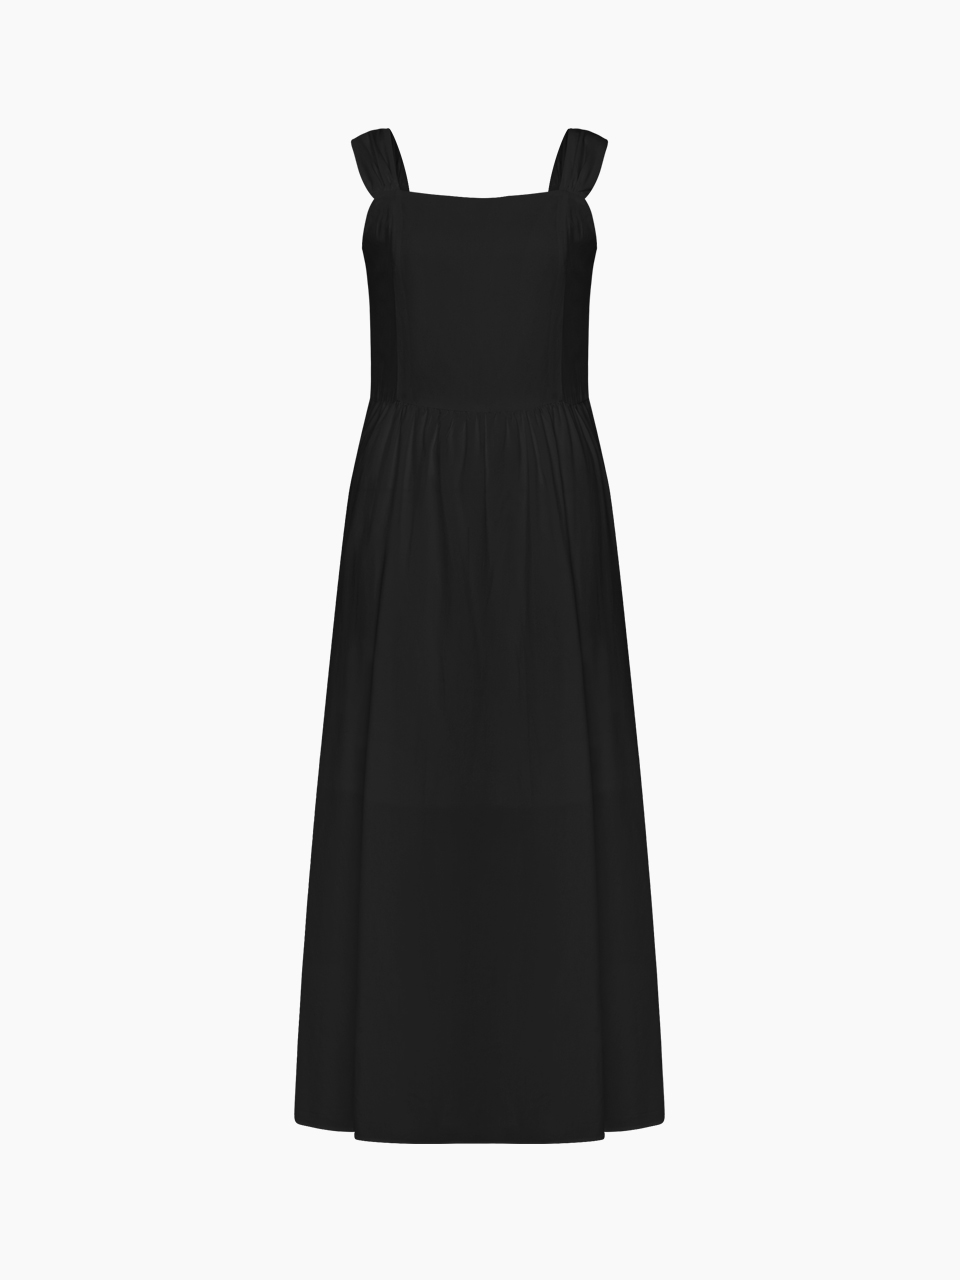 rosy jane dress - black